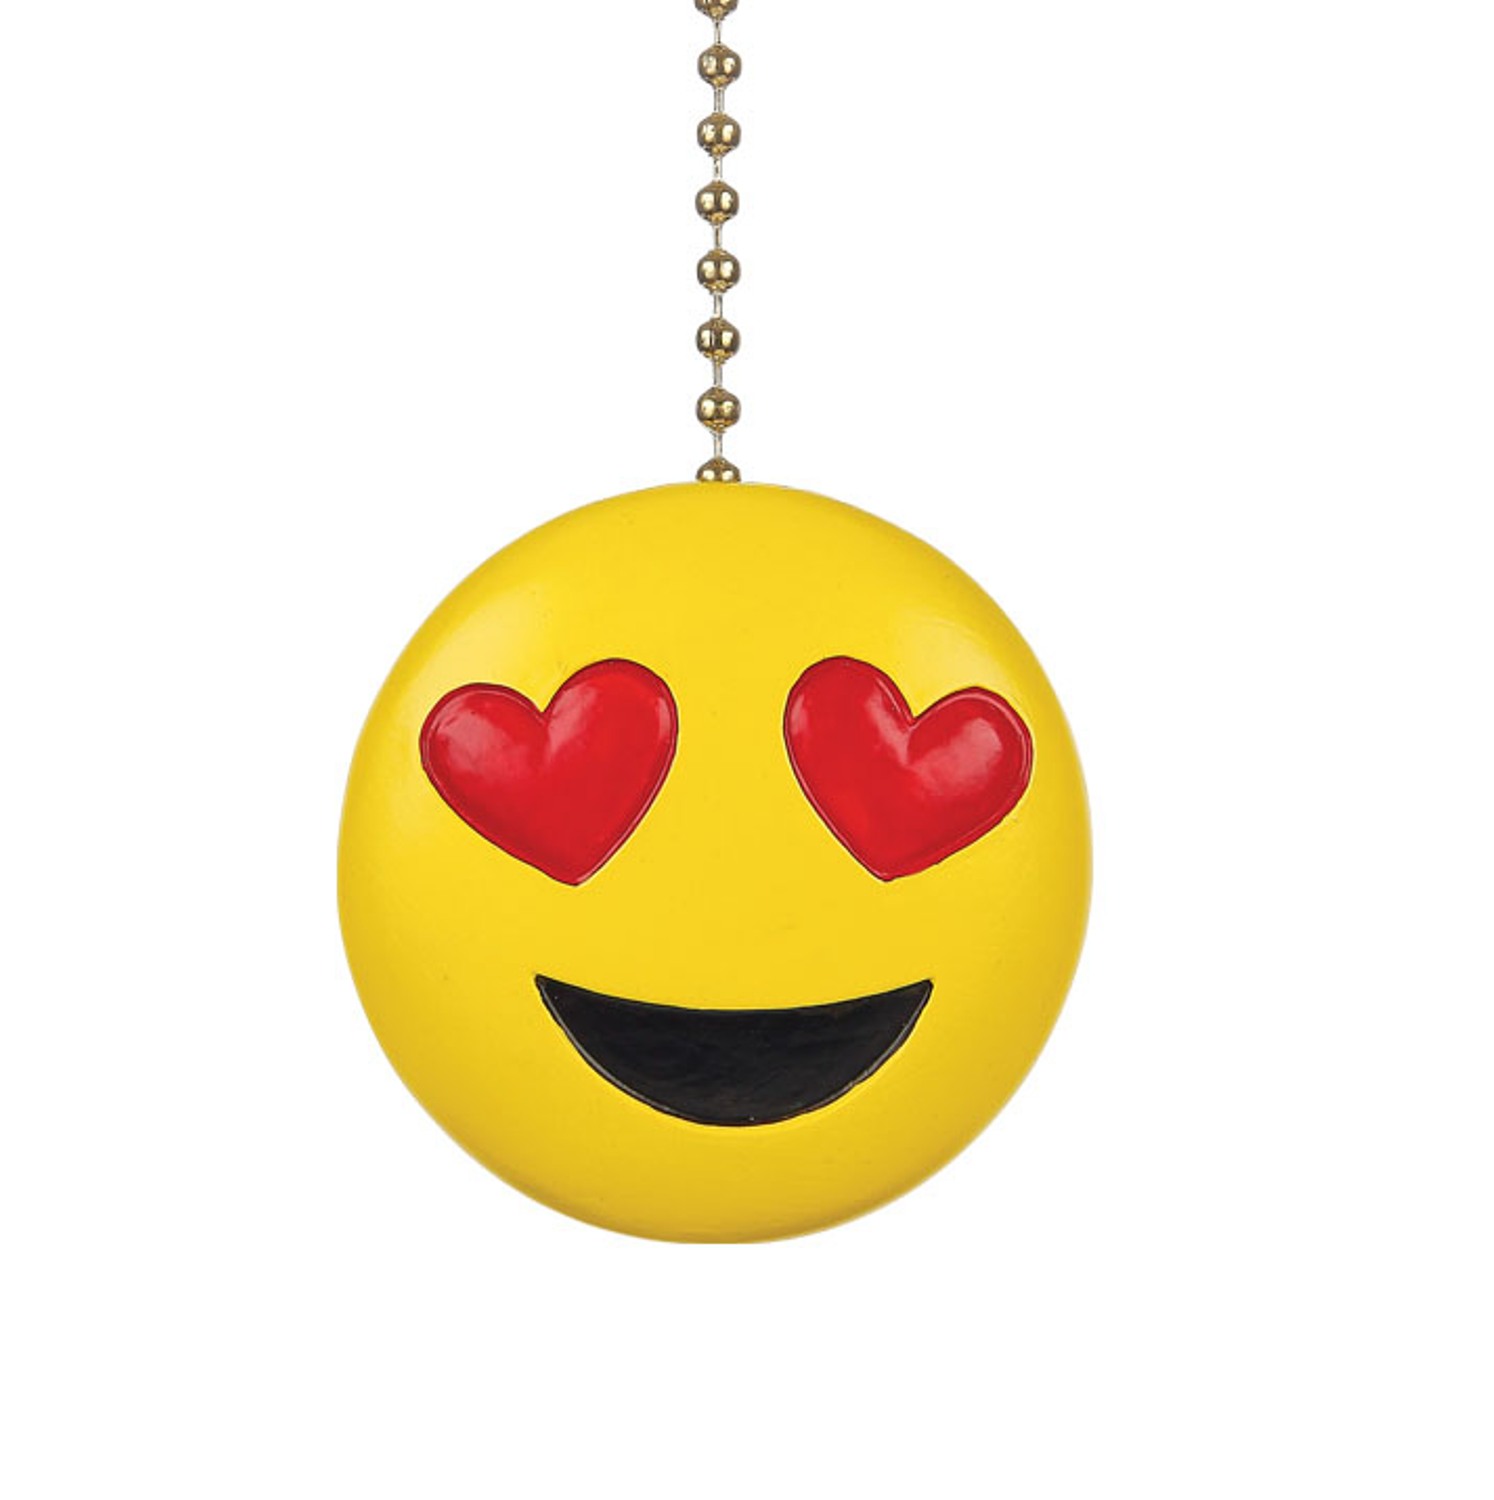 Clementine Heart Eyes Smiling Emoji Decorative Ceiling Fan Light Dimensional Pull